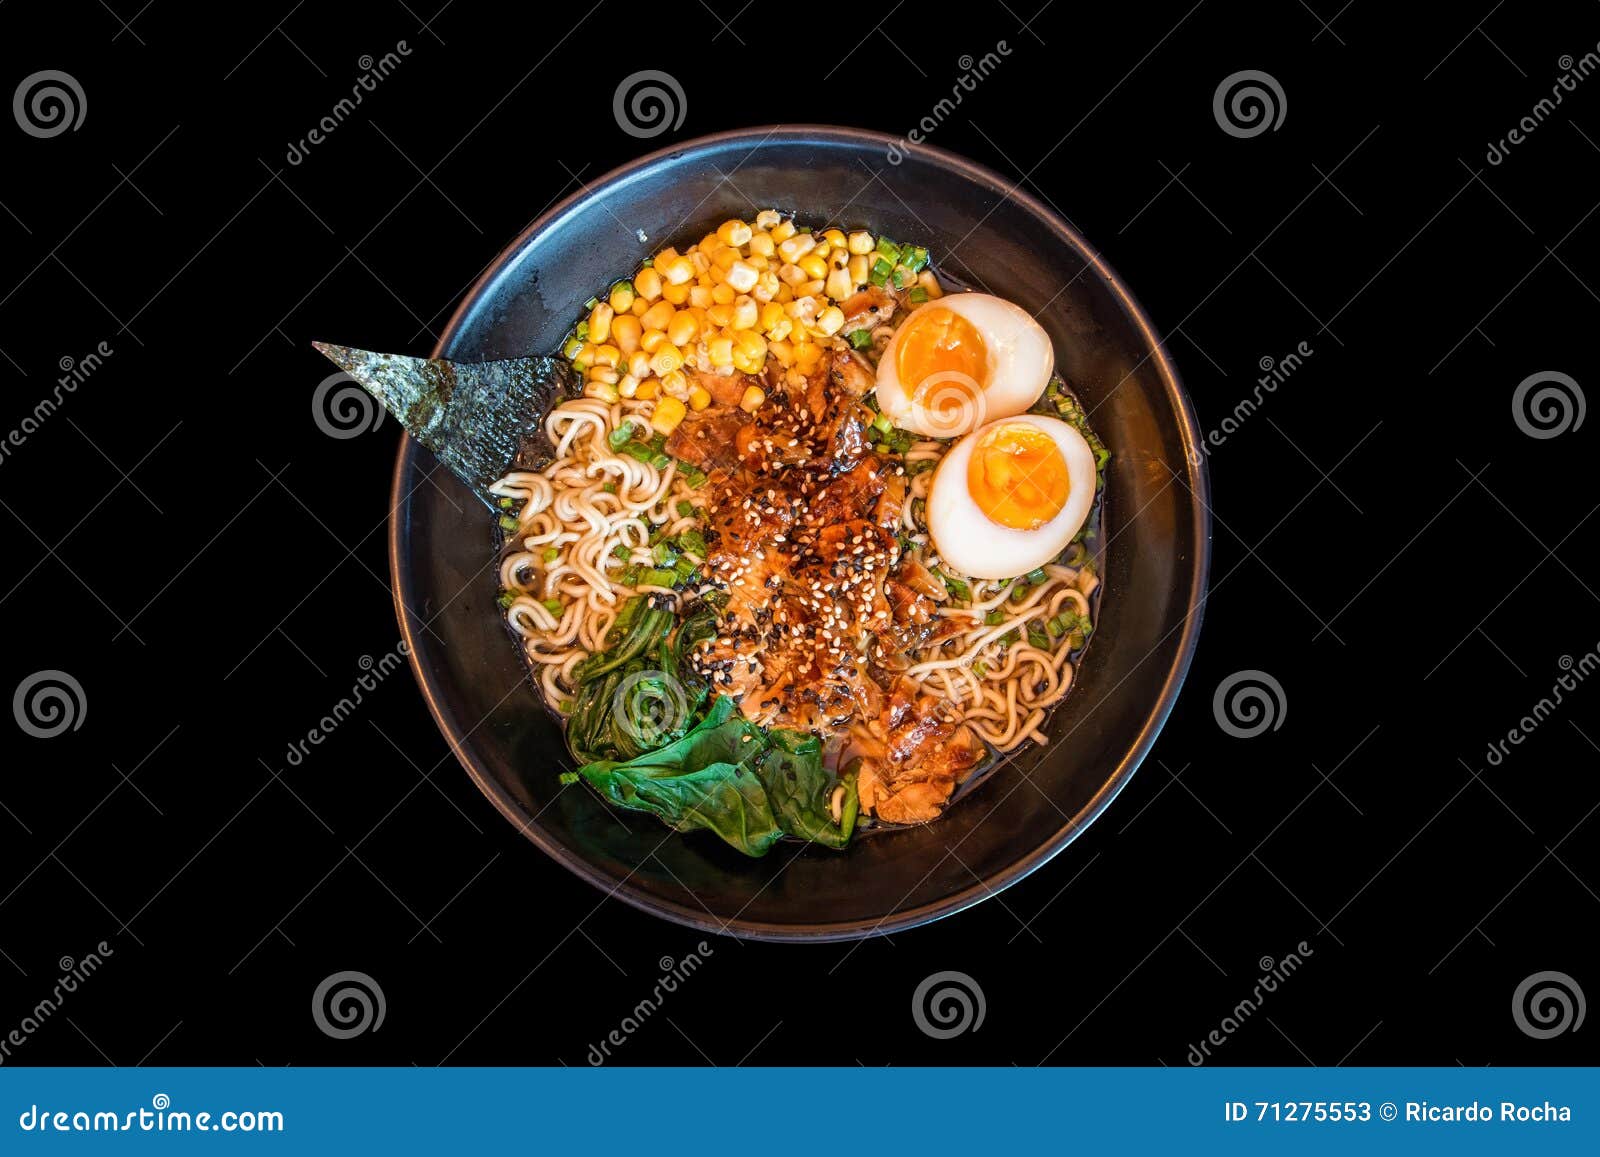 Ramen stock image. Image of noodles, vegetable, broth - 71275553